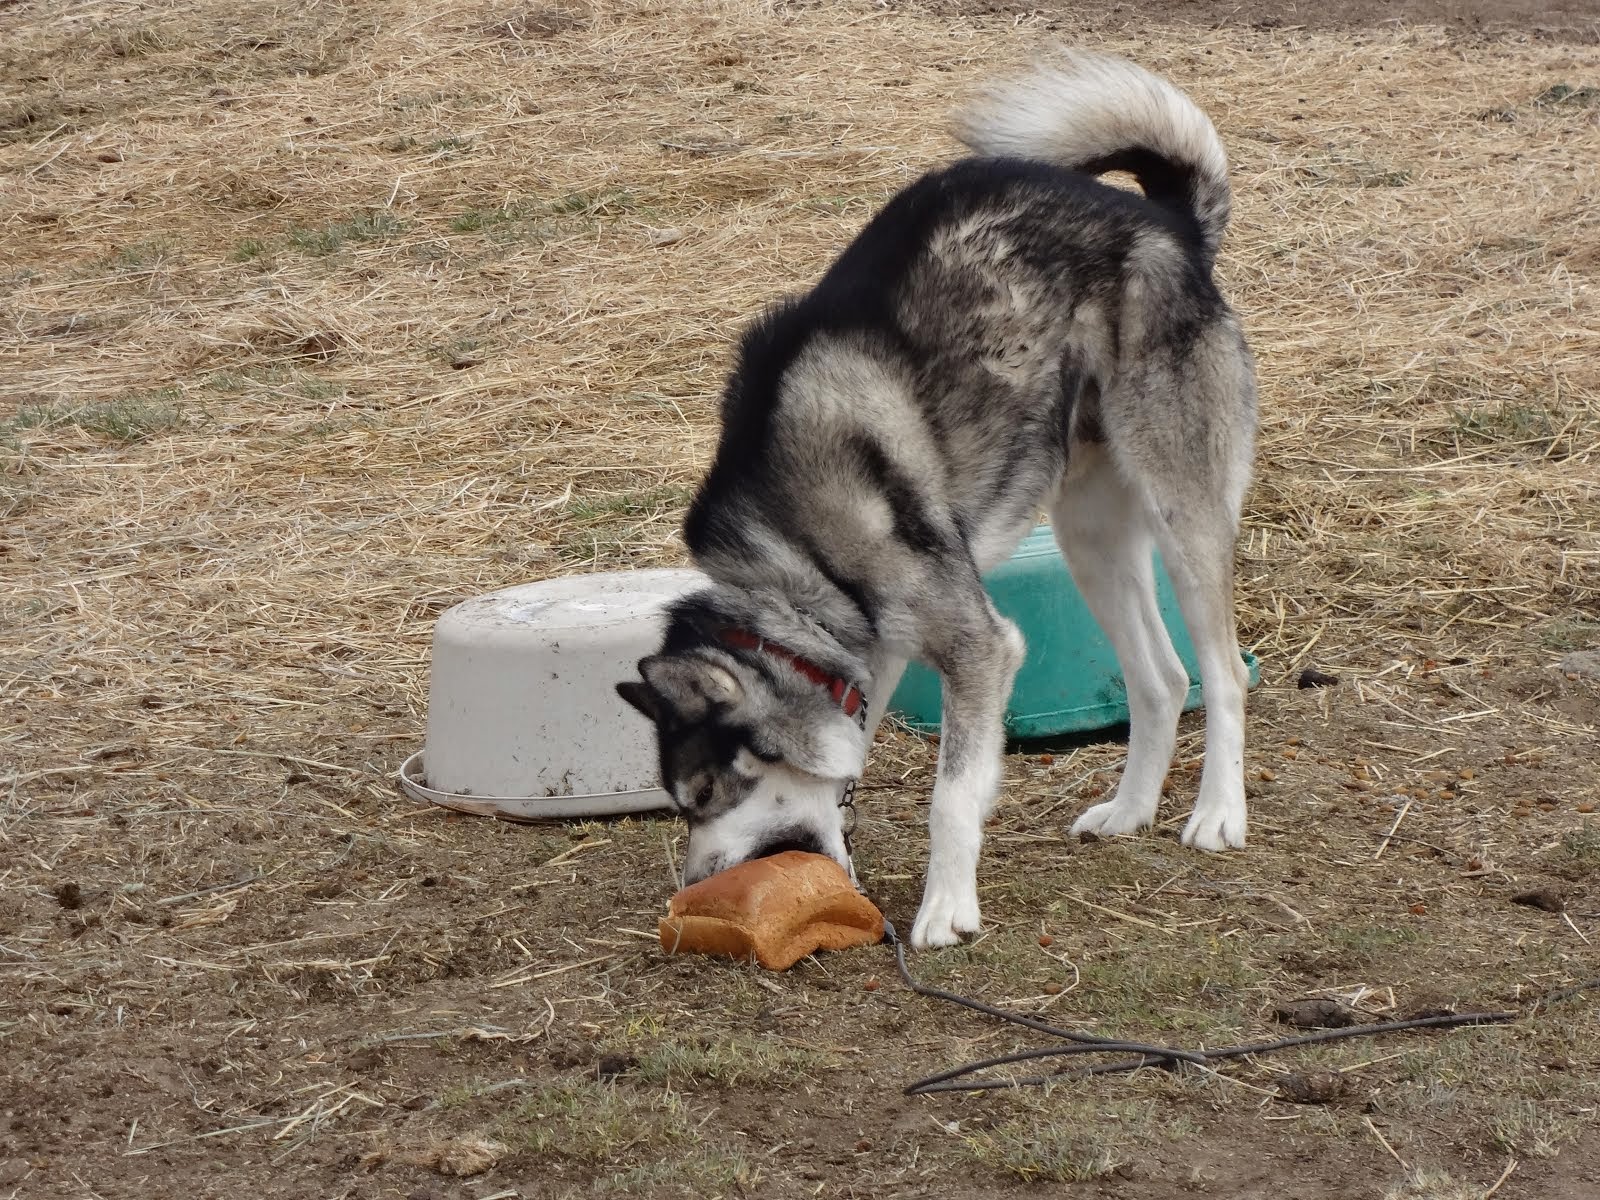 Neko eating a loaf of bread.